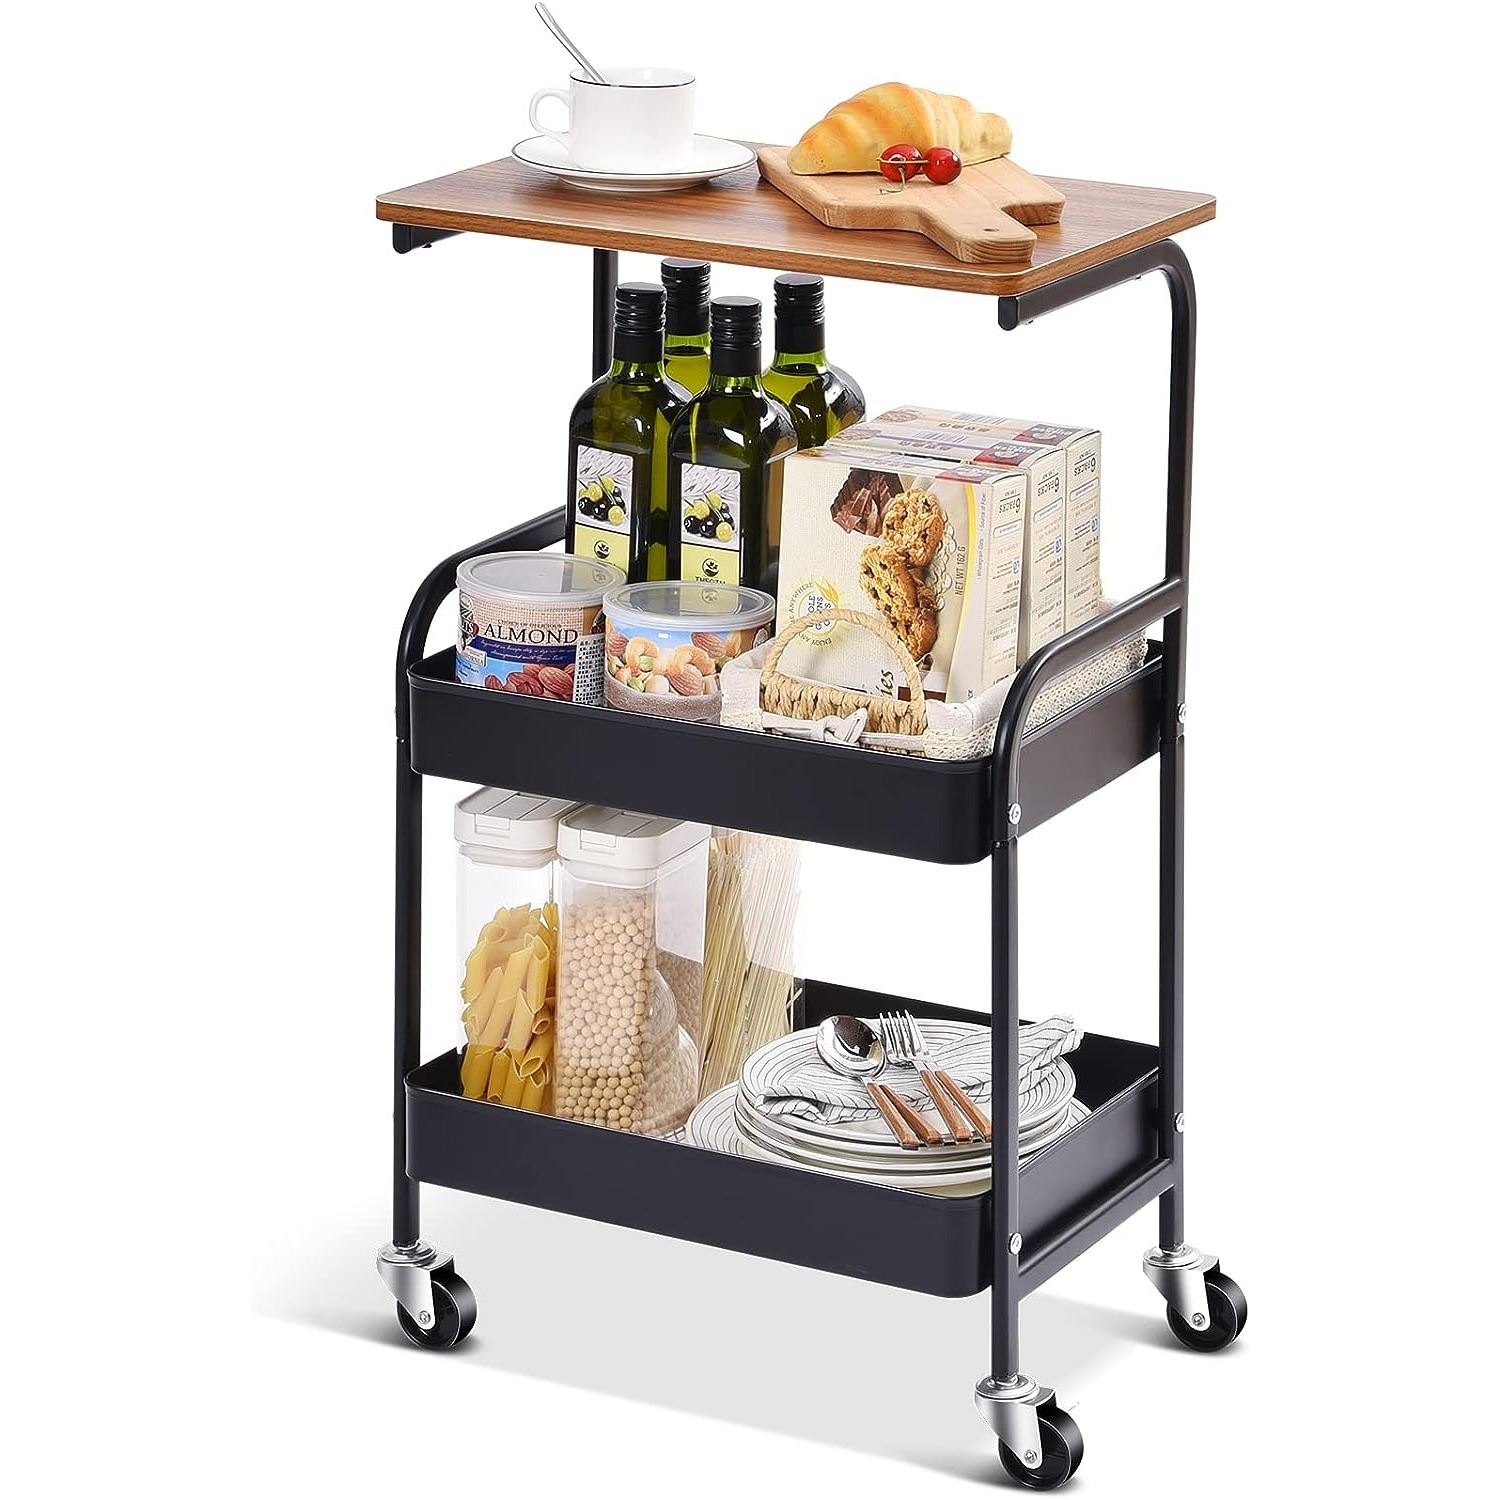 Carrito de almacenamiento estrecho para cocina, carrito utilitario delgado  de 3 niveles, estante organizador deslizante con ruedas, fácil de instalar